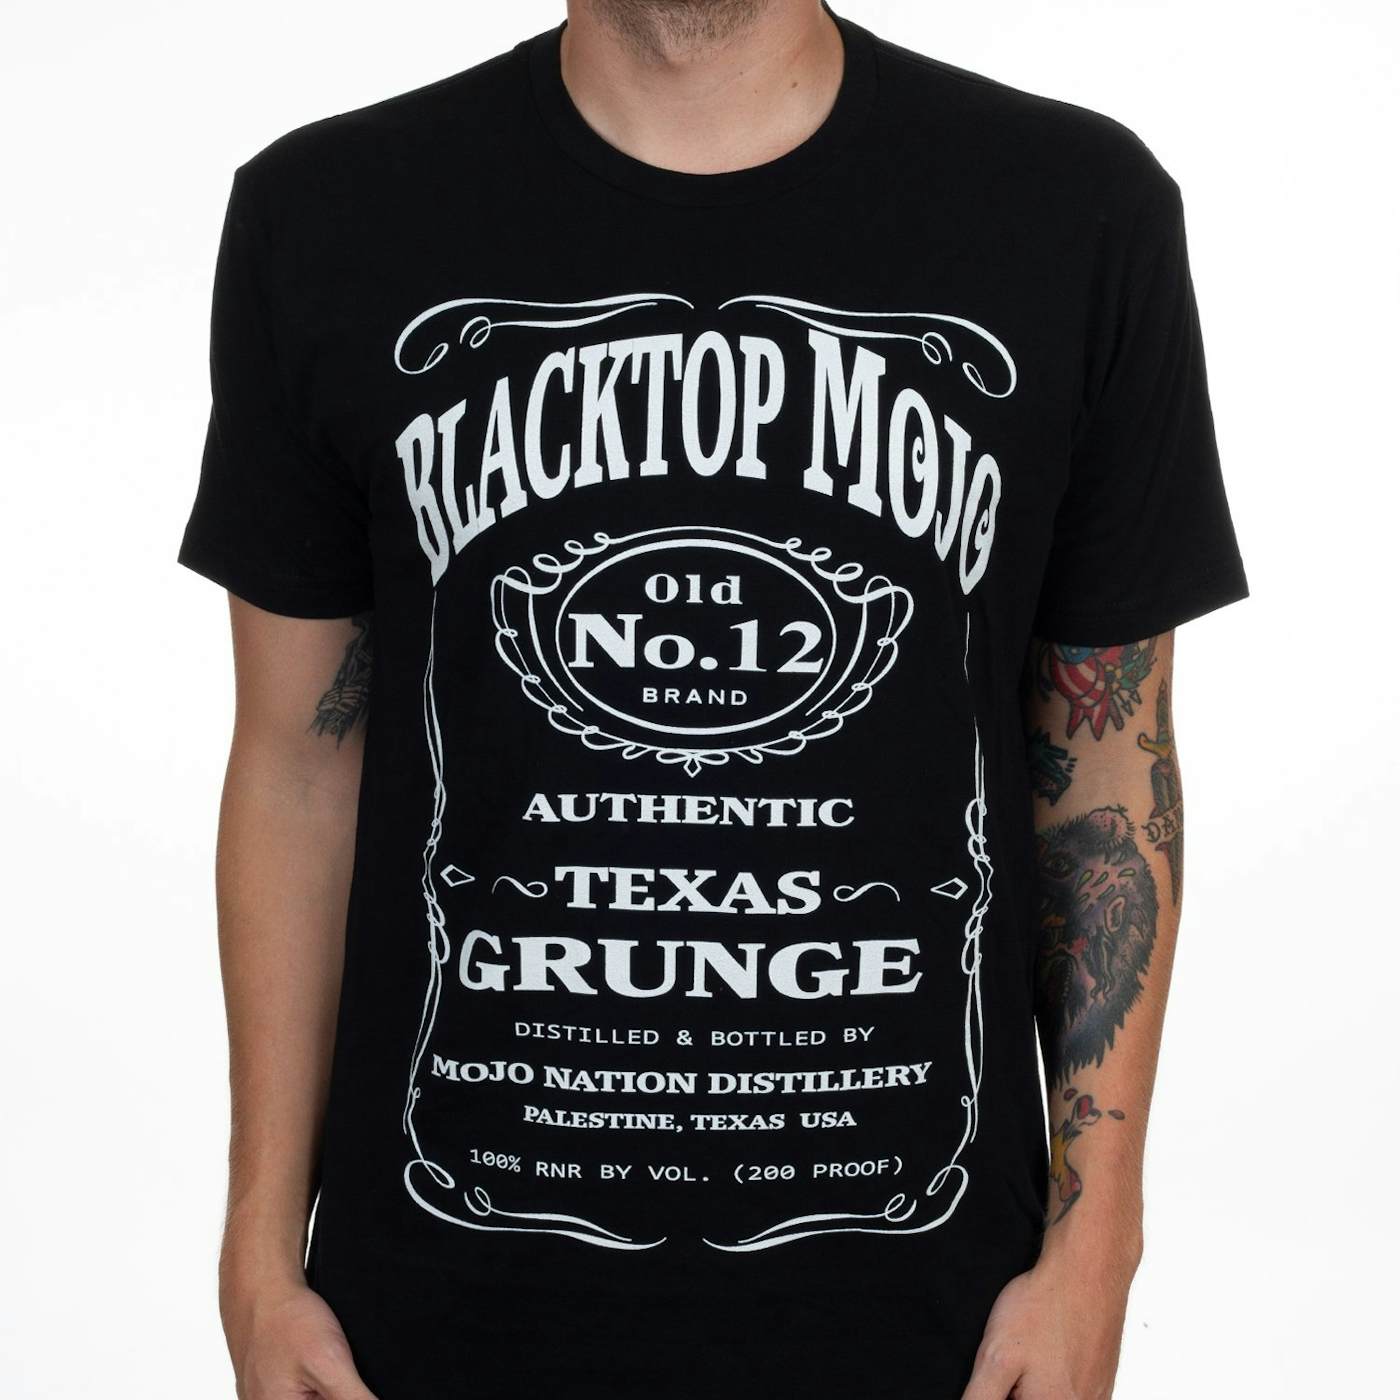 Blacktop Mojo "Texas Grunge" T-Shirt